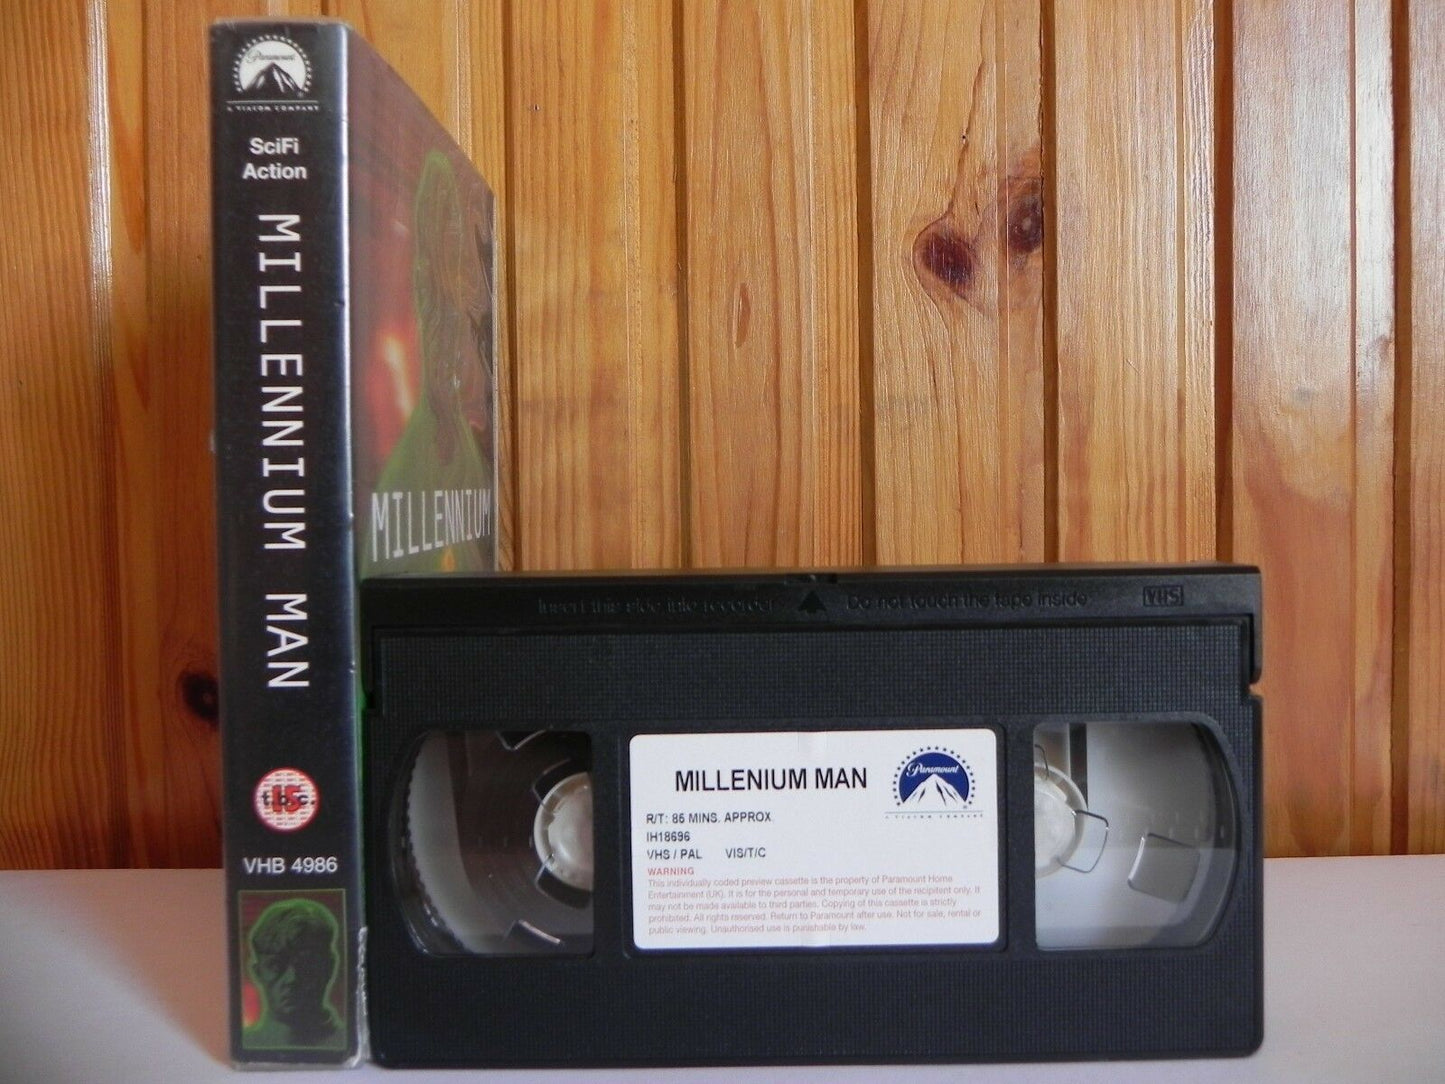 Millennium Man - Paramount - Sci-Fi - Sample - Andrew Jackson - Large Box - VHS-